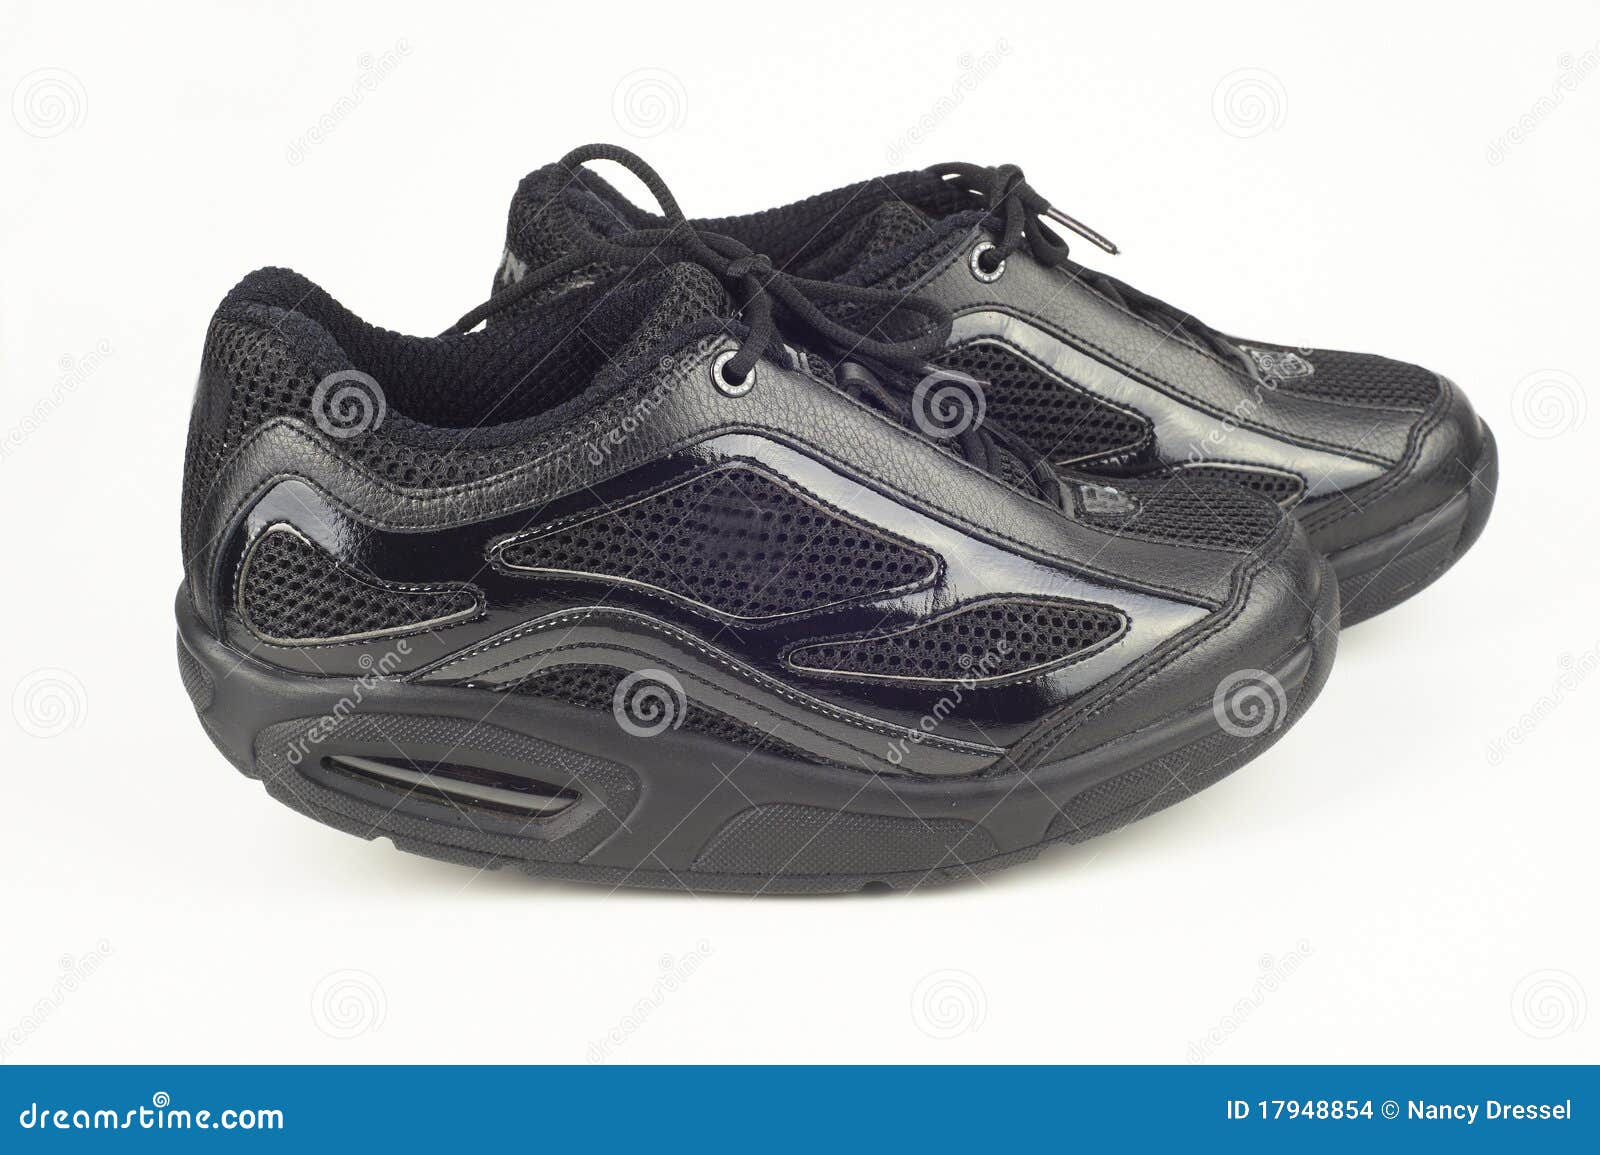 new black toning shoes